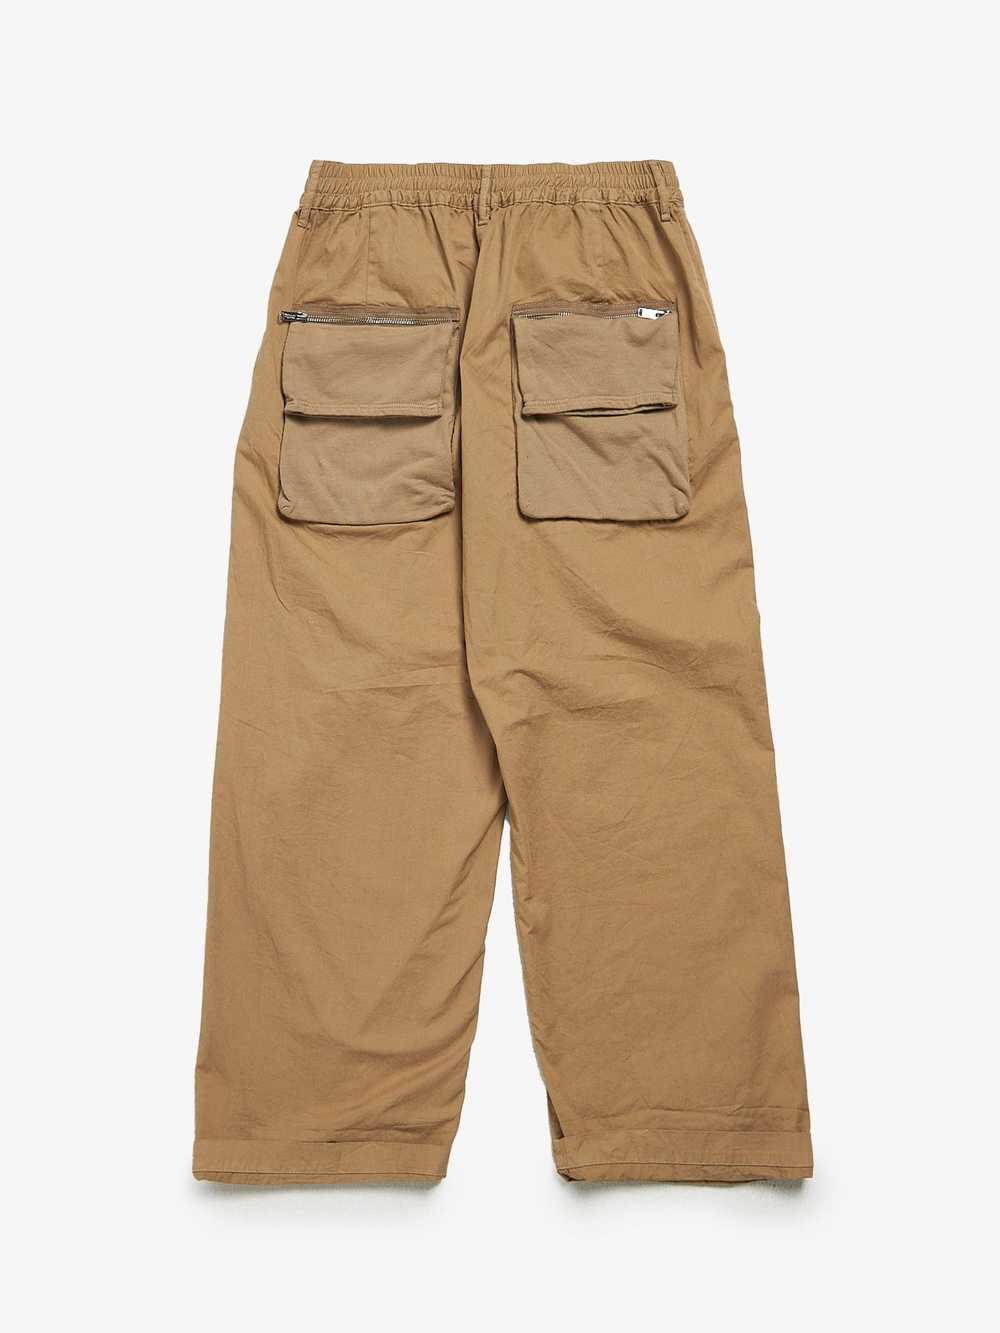 Undercover Beige Back Pocket Detailed Cotton Pants - image 2